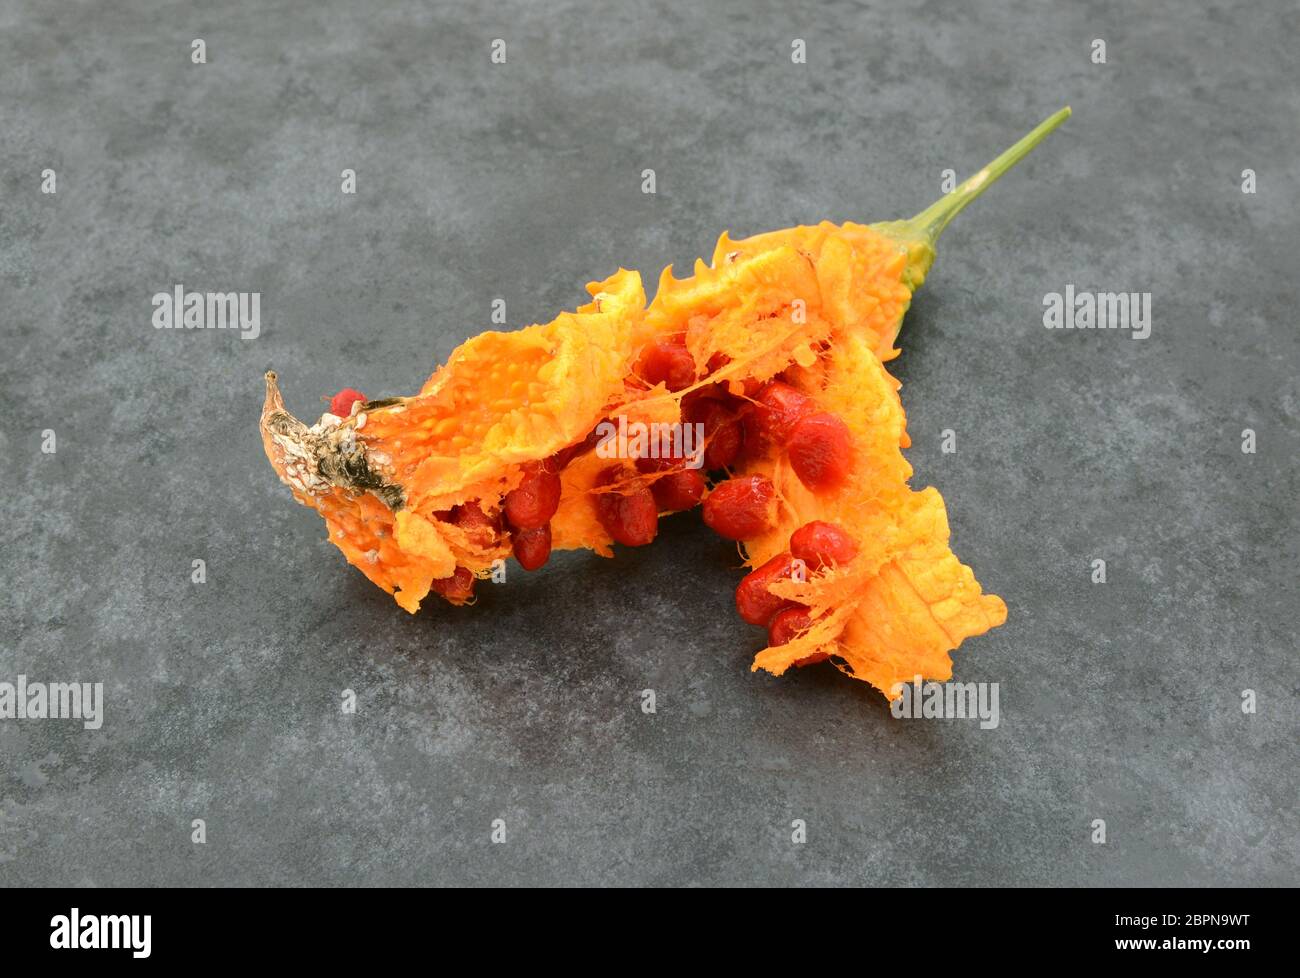 Sticky red seeds revealed inside an overripe orange bitter gourd, on a slate gray background Stock Photo